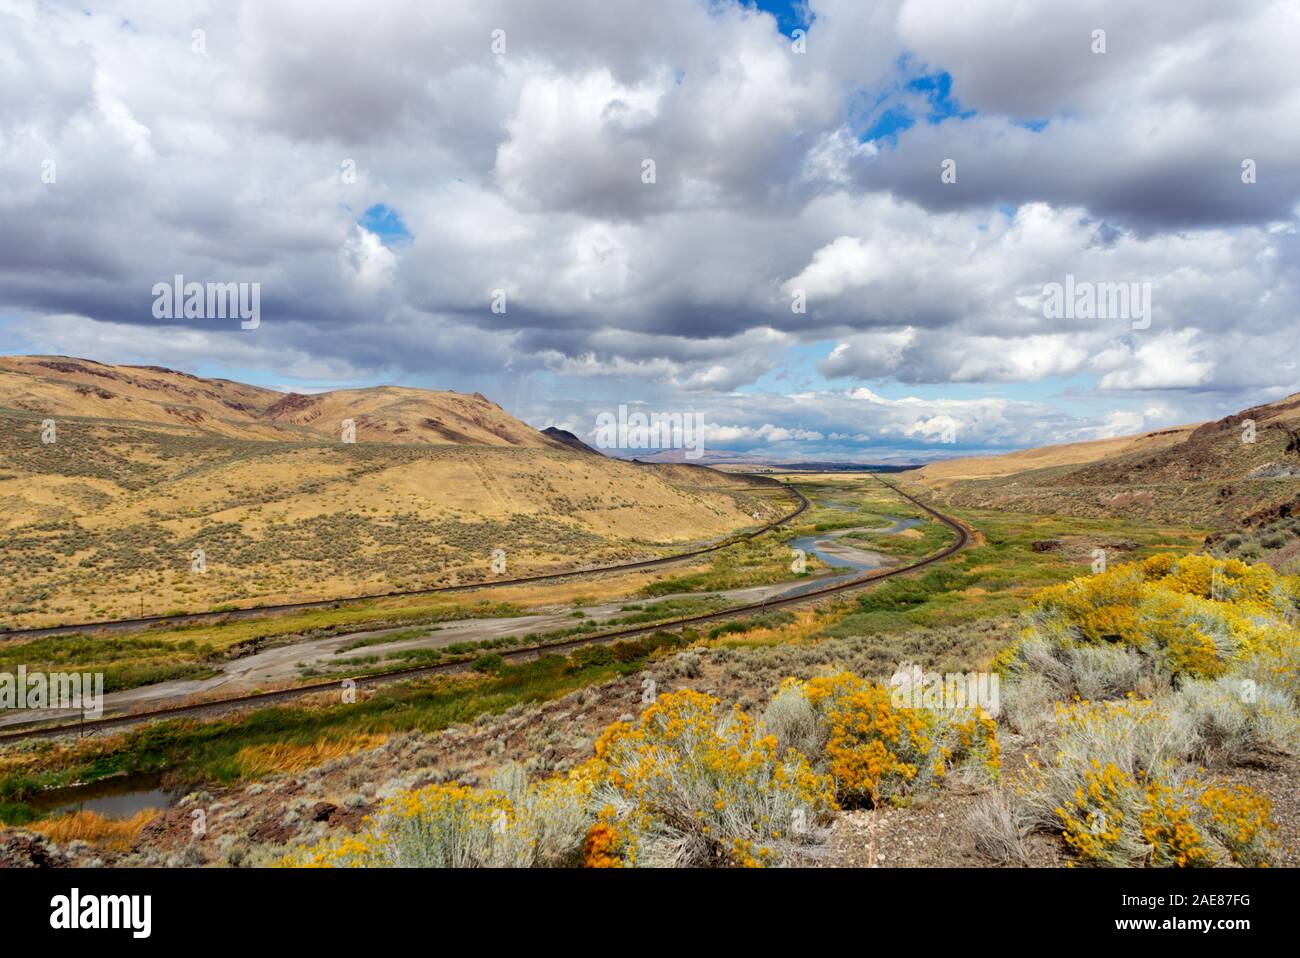 Landscape Double Rail Road (2), State Road 278, Nevada, USA Stock Photo